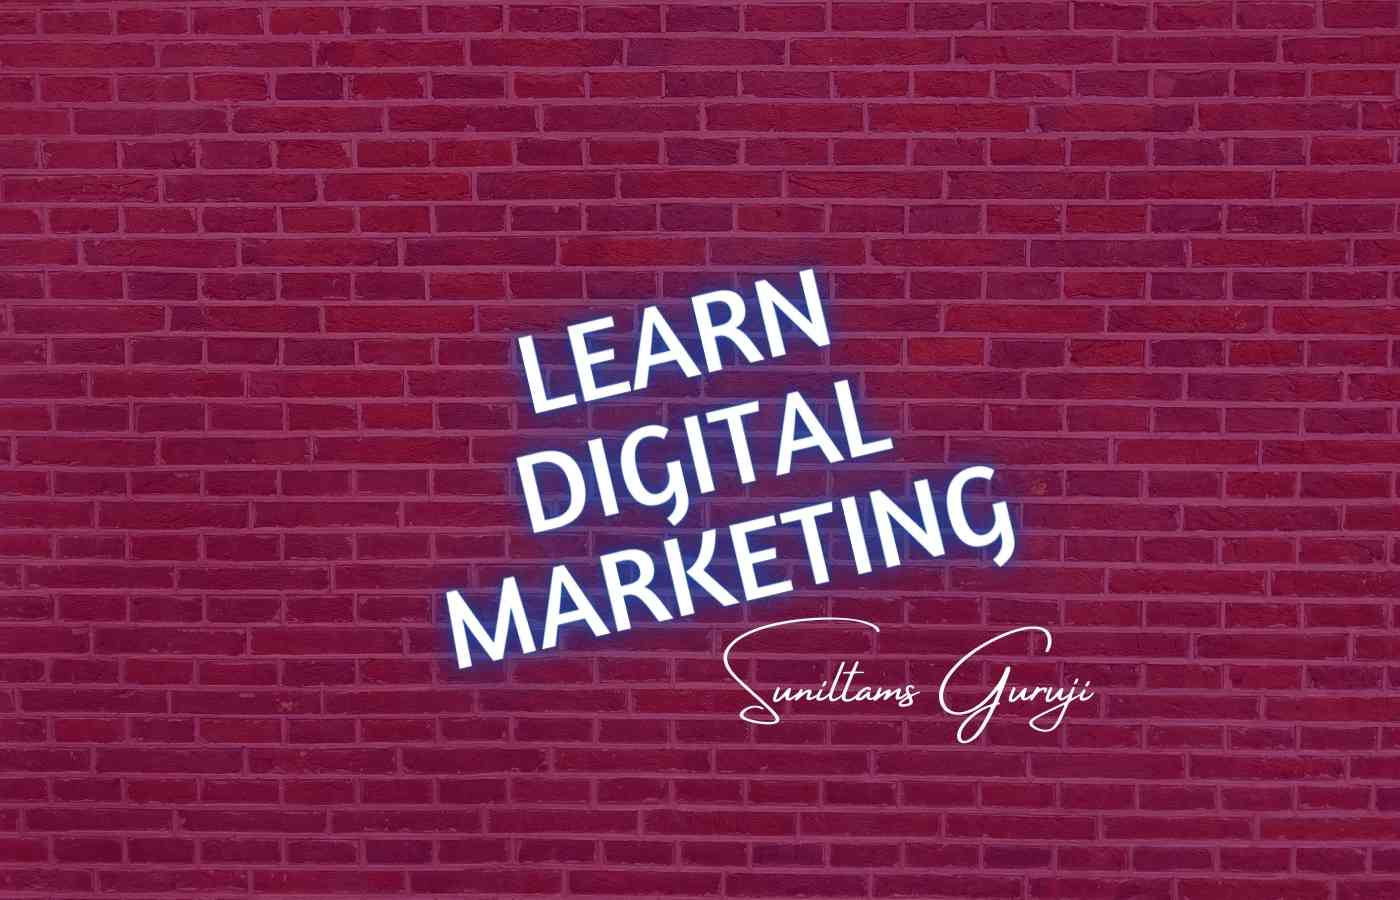 Digital Marketing Course by Suniltams Guruji